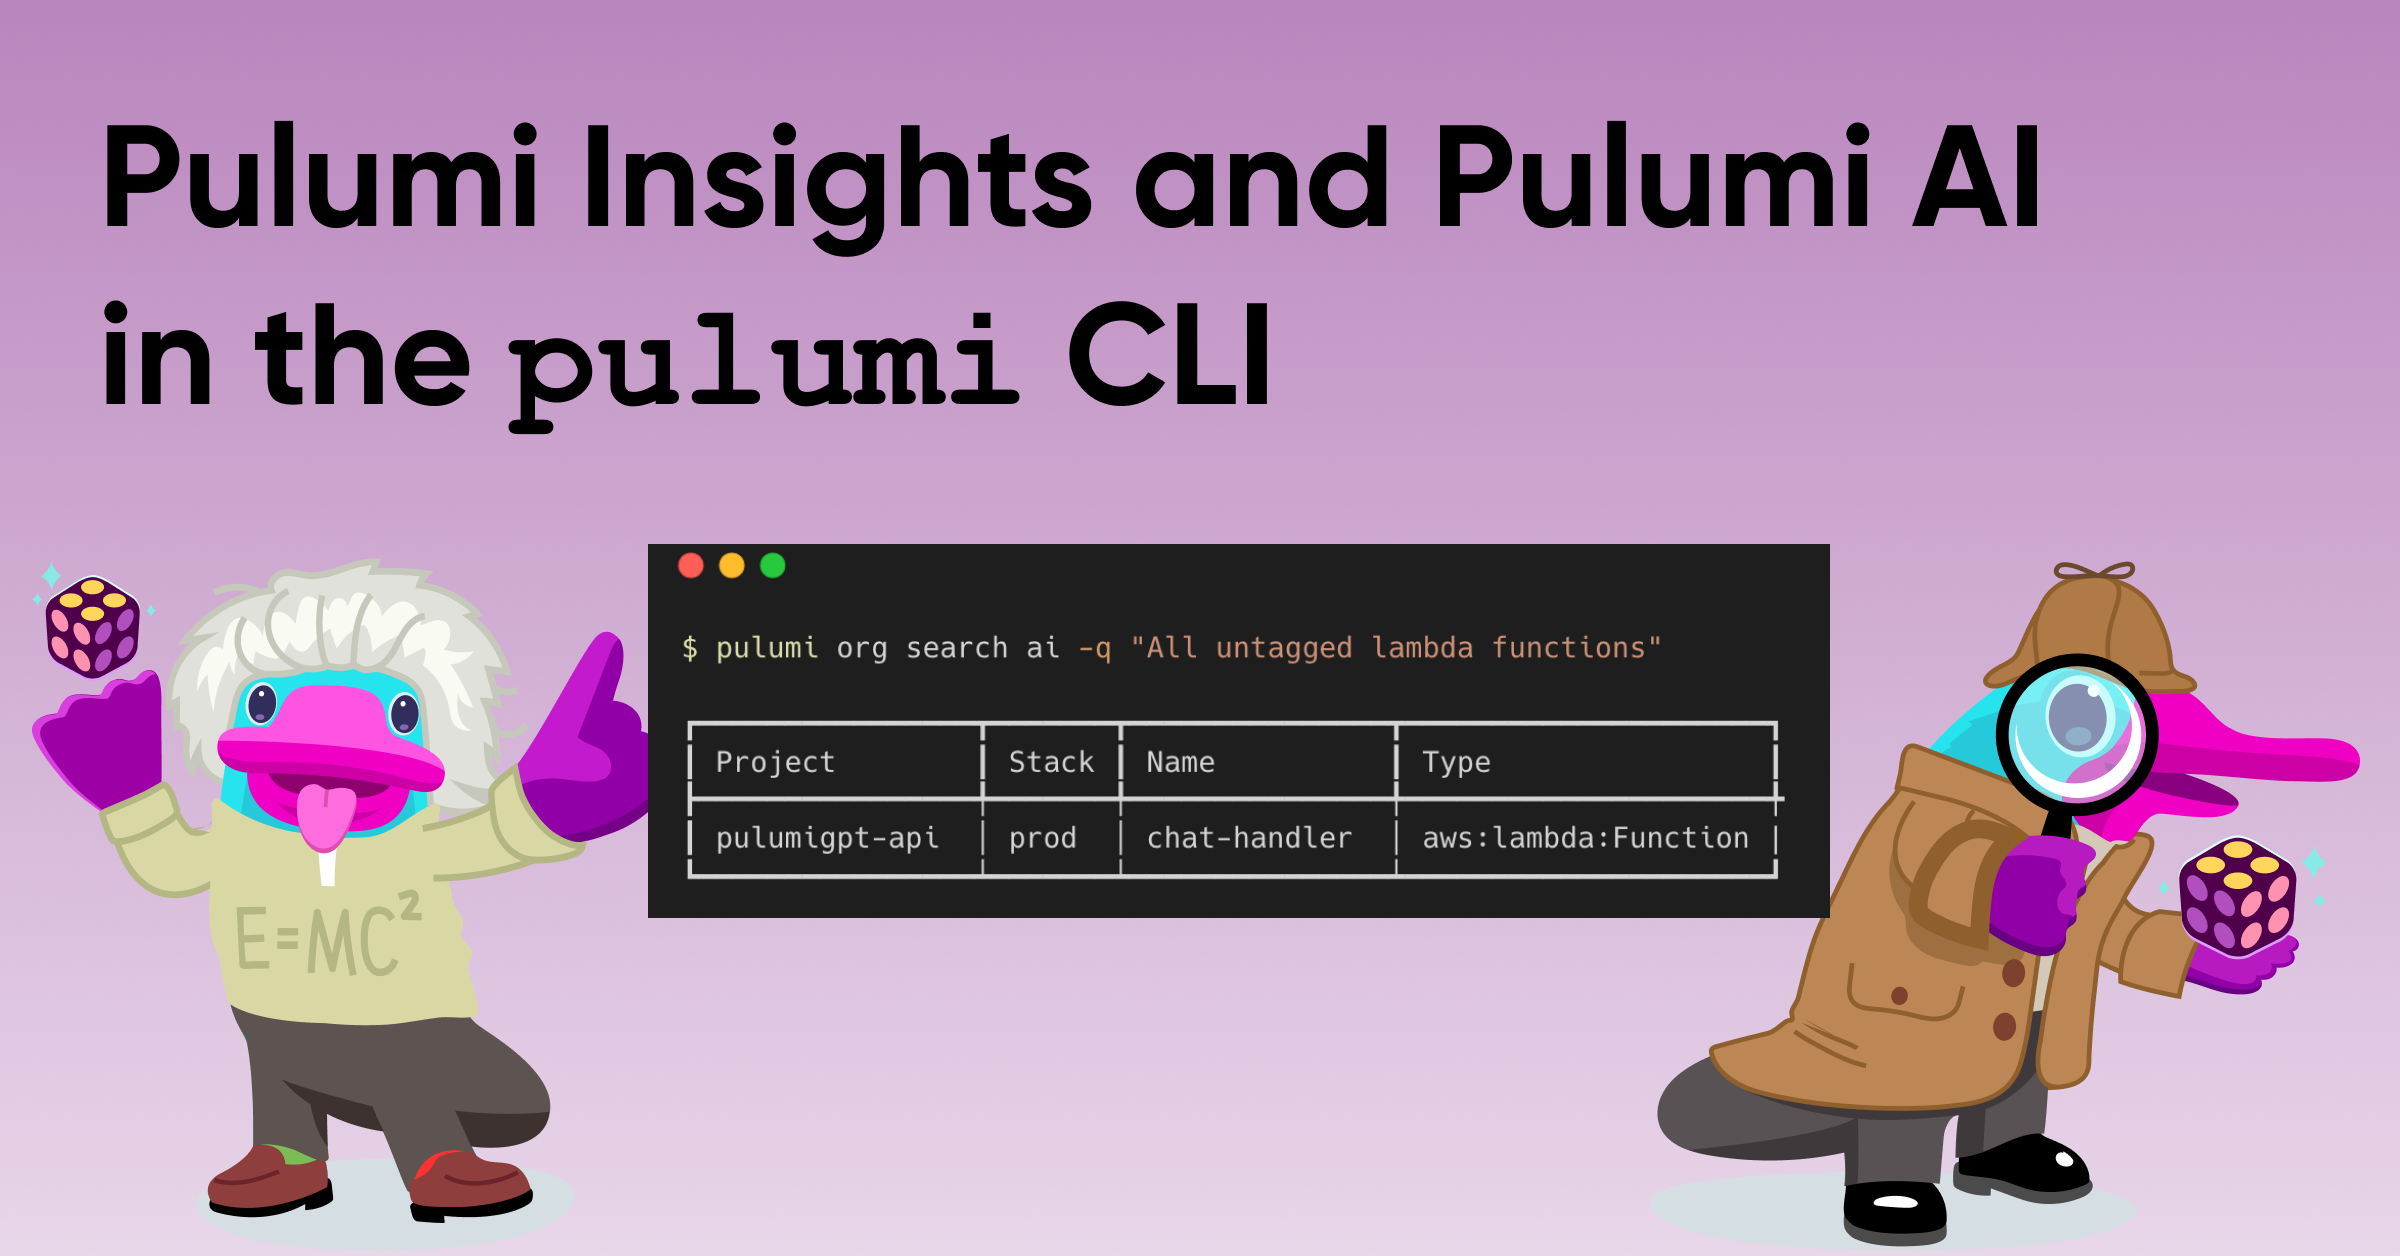 Pulumi Insights and AI in the Pulumi CLI